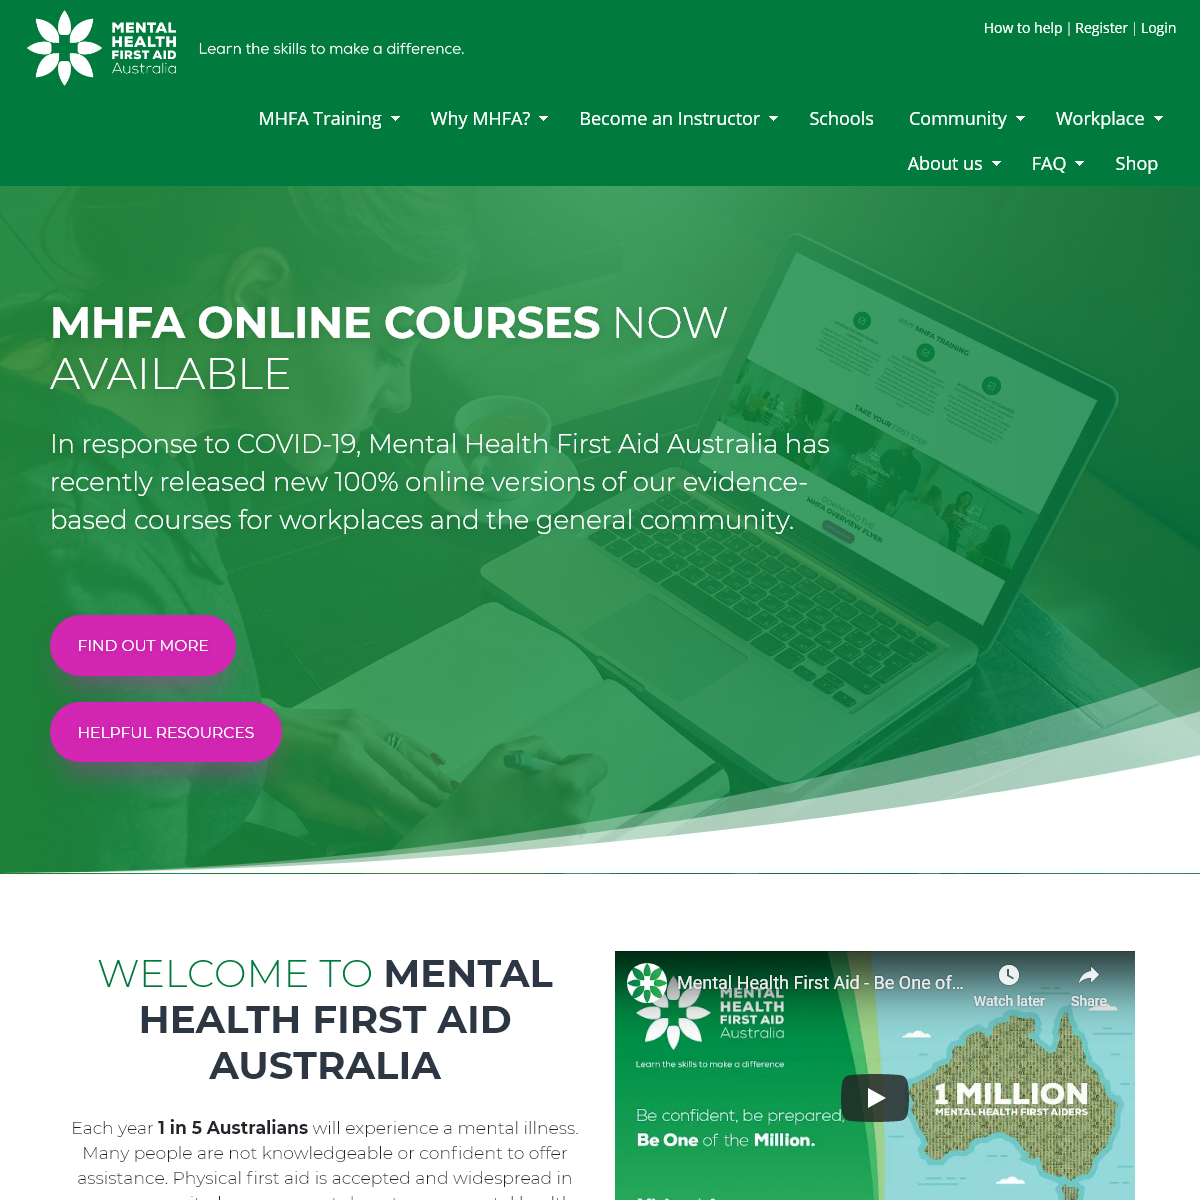 A complete backup of mhfa.com.au